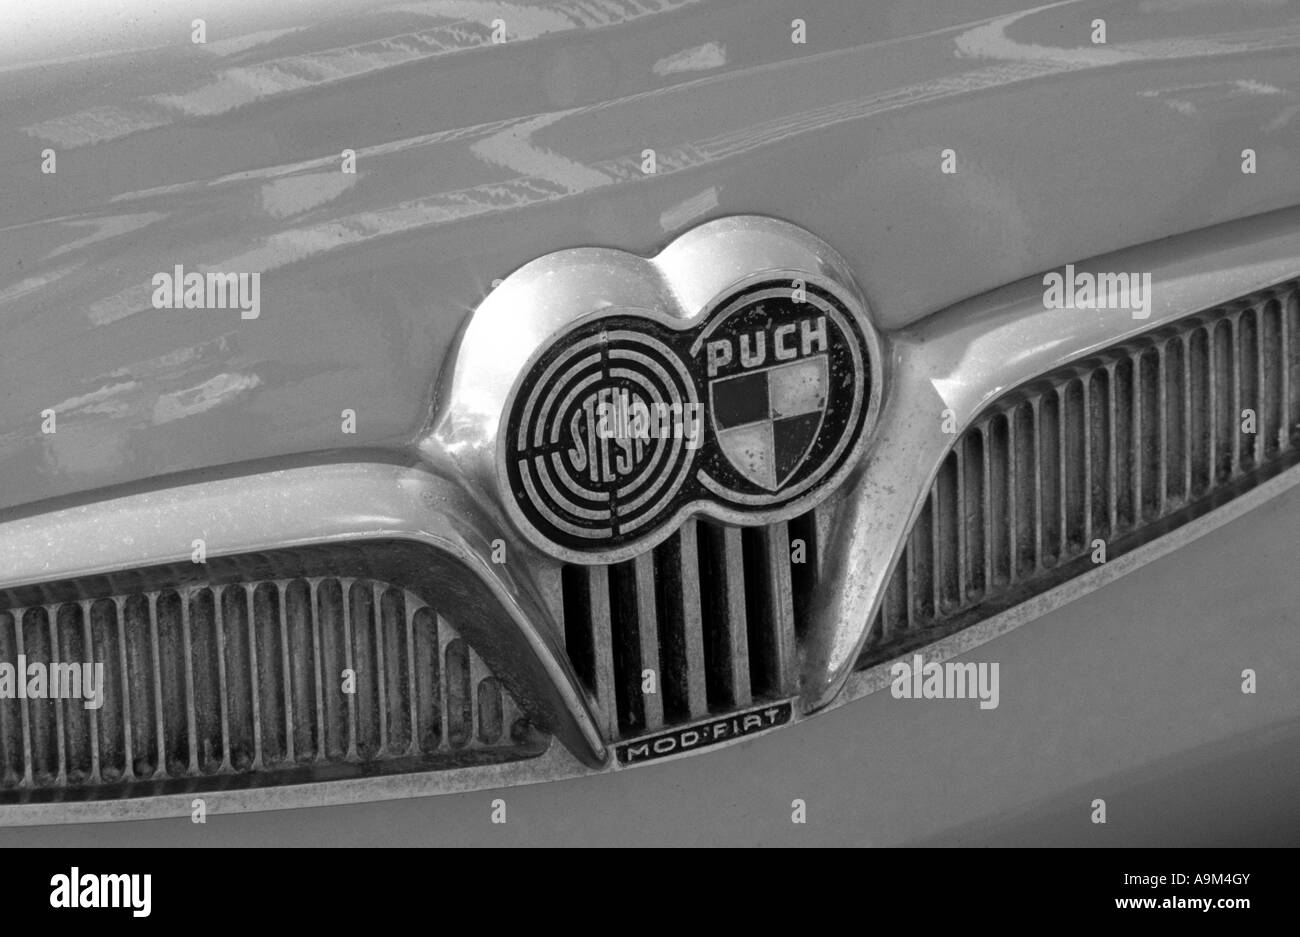 Steyr-Puch 500D of 1966. German car manufacturer. Steyr-Puch car auto badge marque German maker make Stock Photo